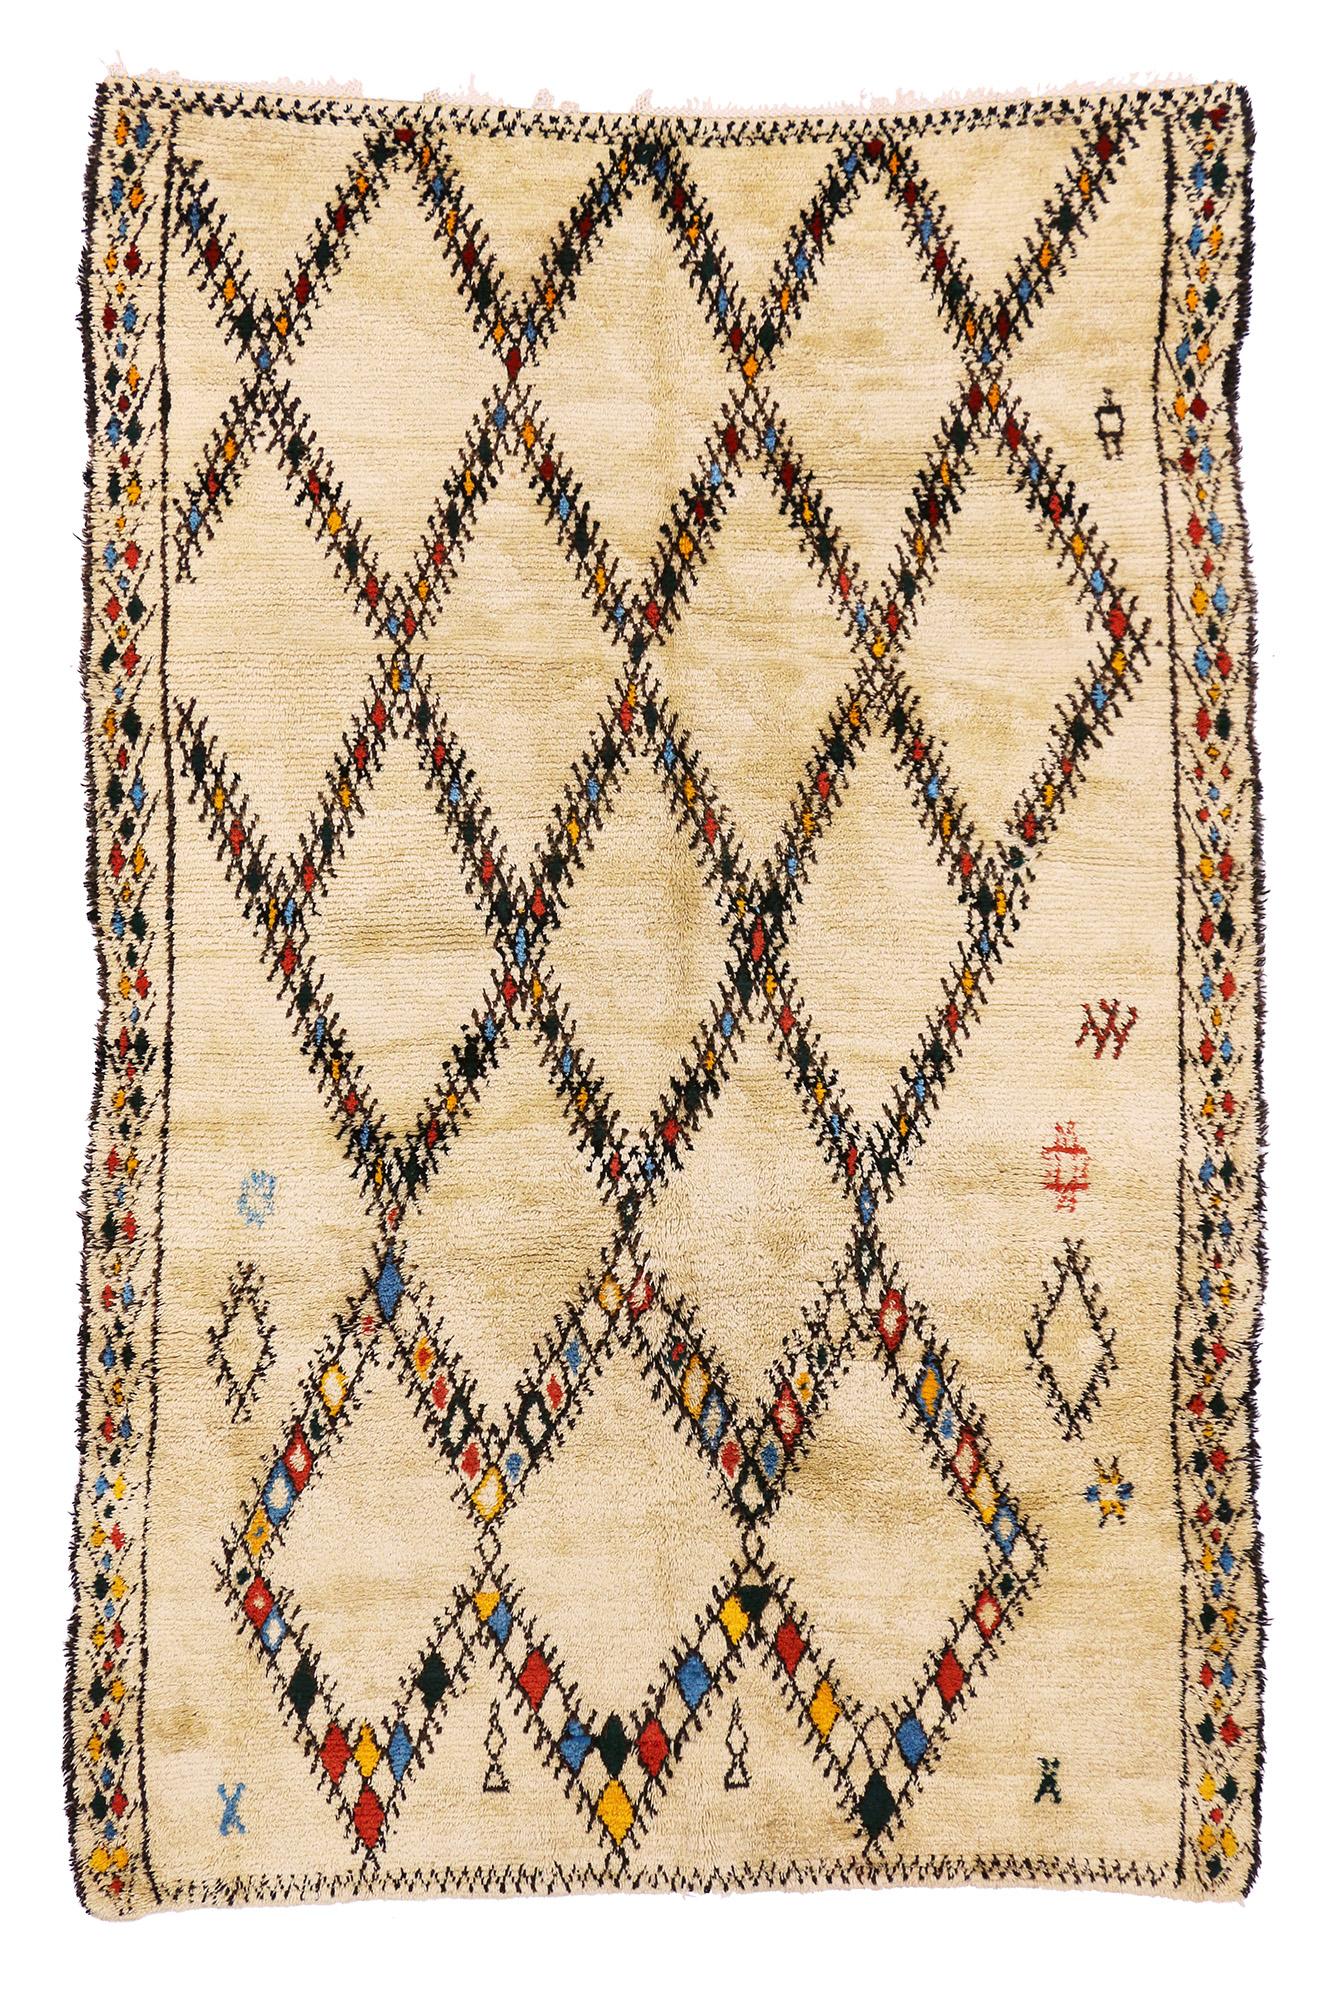 Vintage Moroccan Beni Ourain Rug, Midcentury Modern Meets Tribal Enchantment